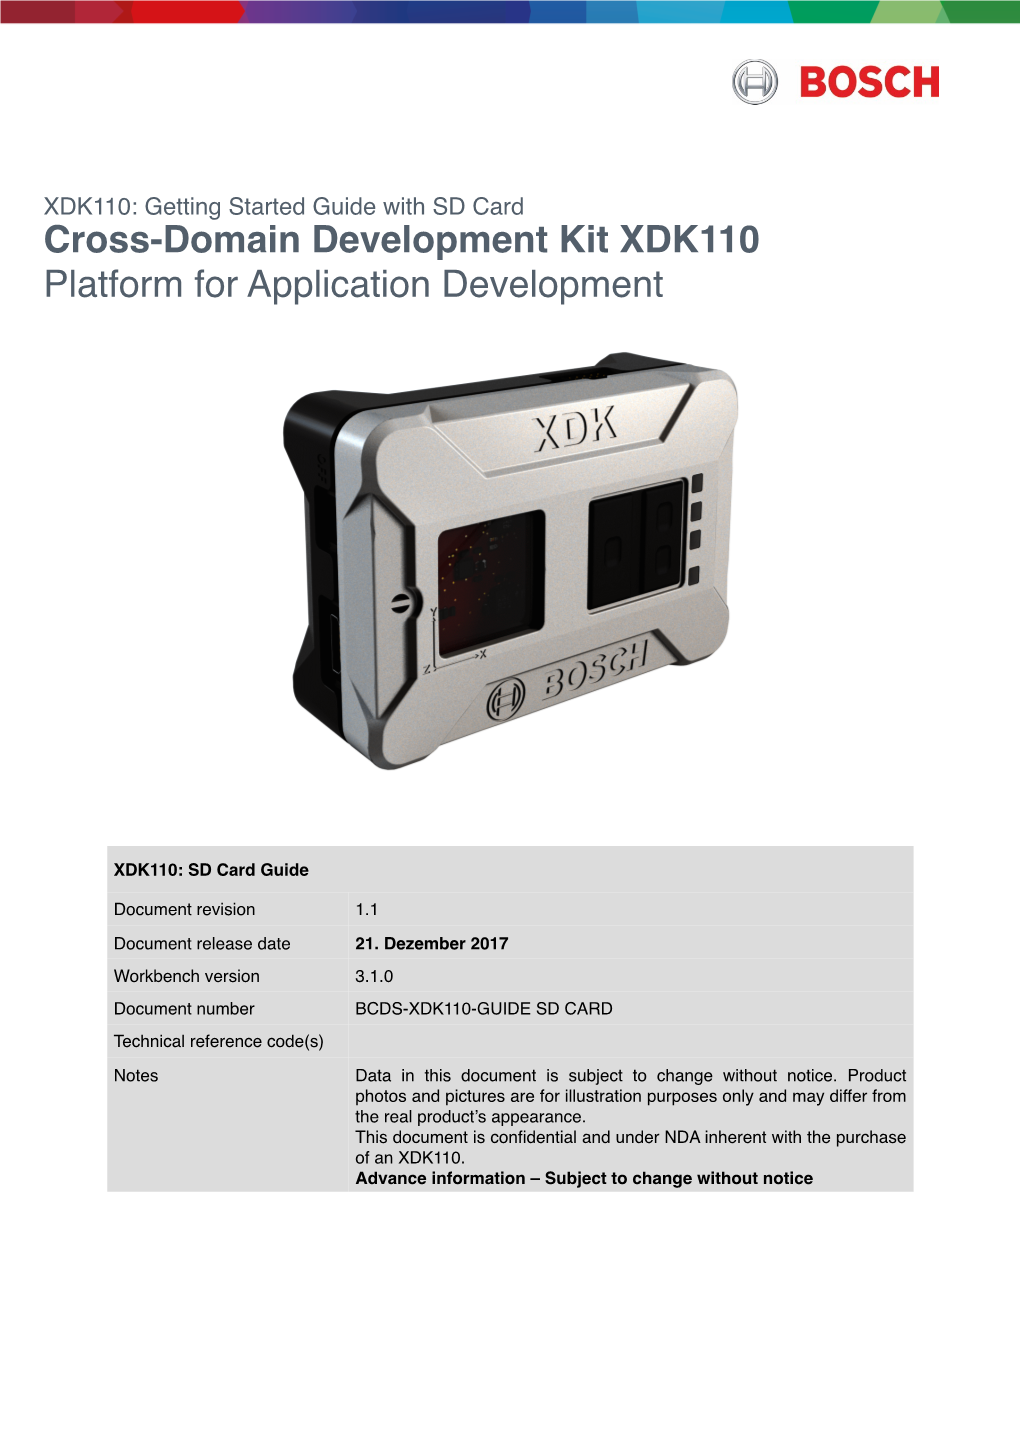 Cross-Domain Development Kit XDK110 Platform for Application Development